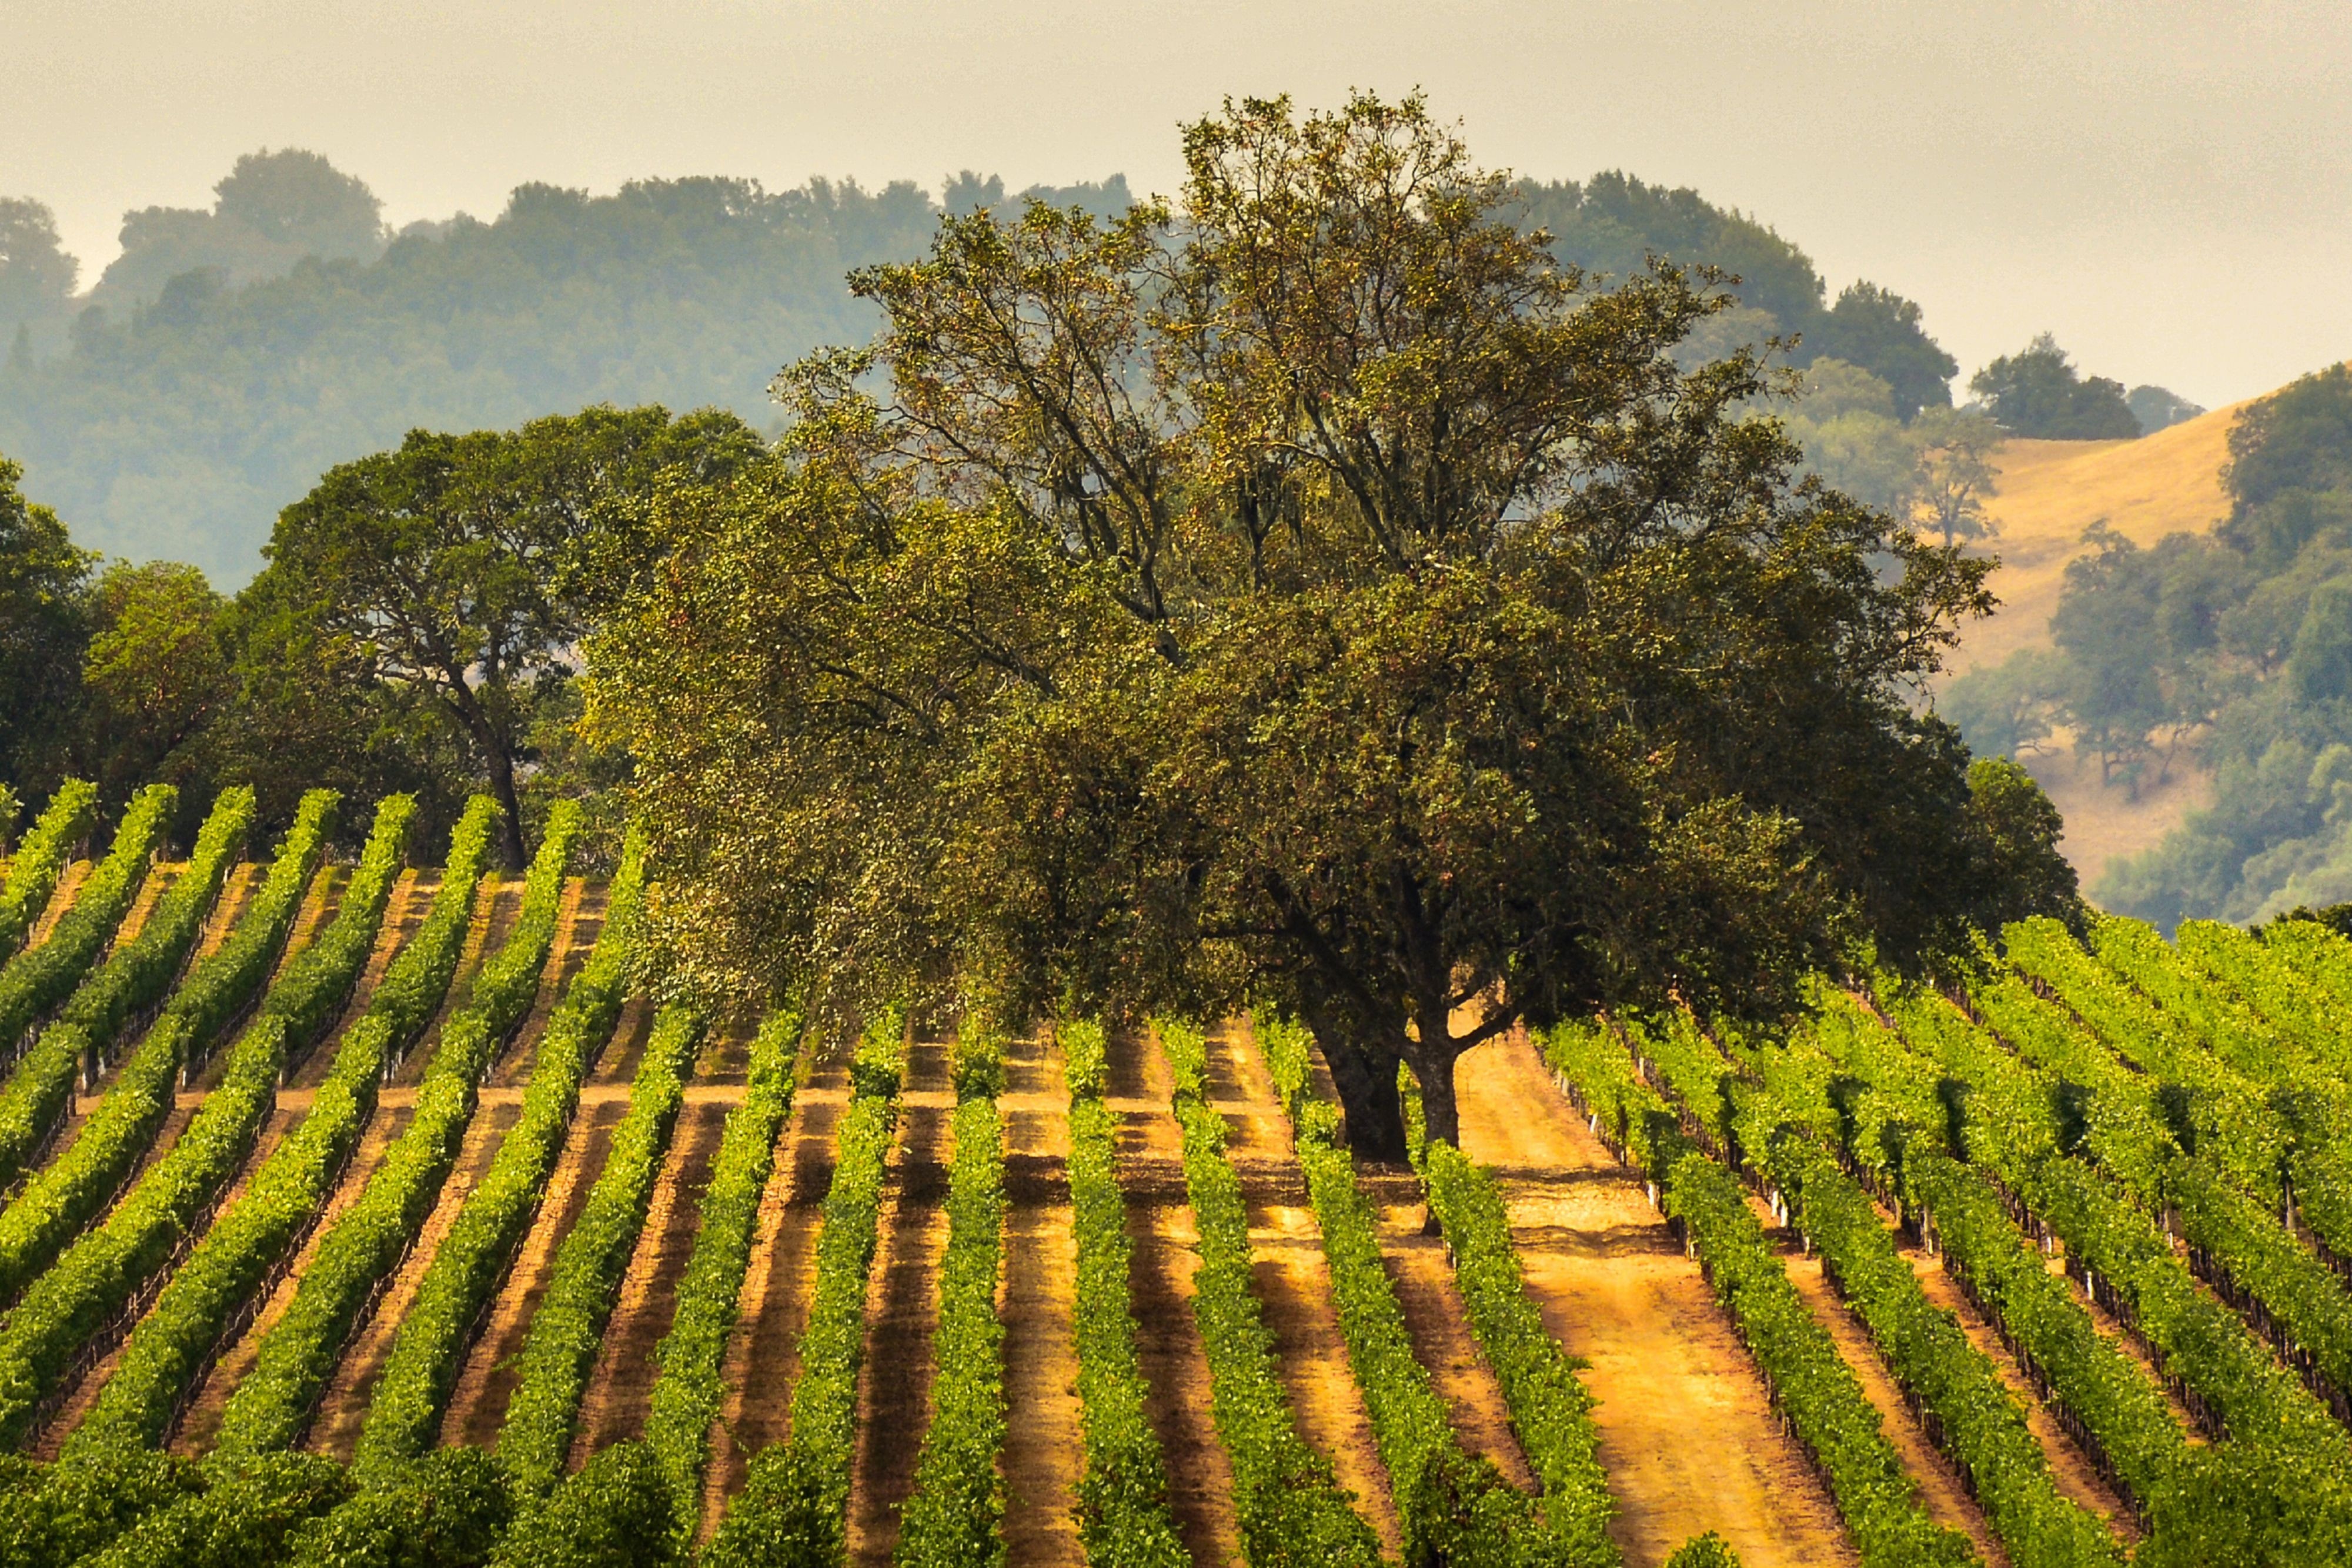 Sonoma county vineyard